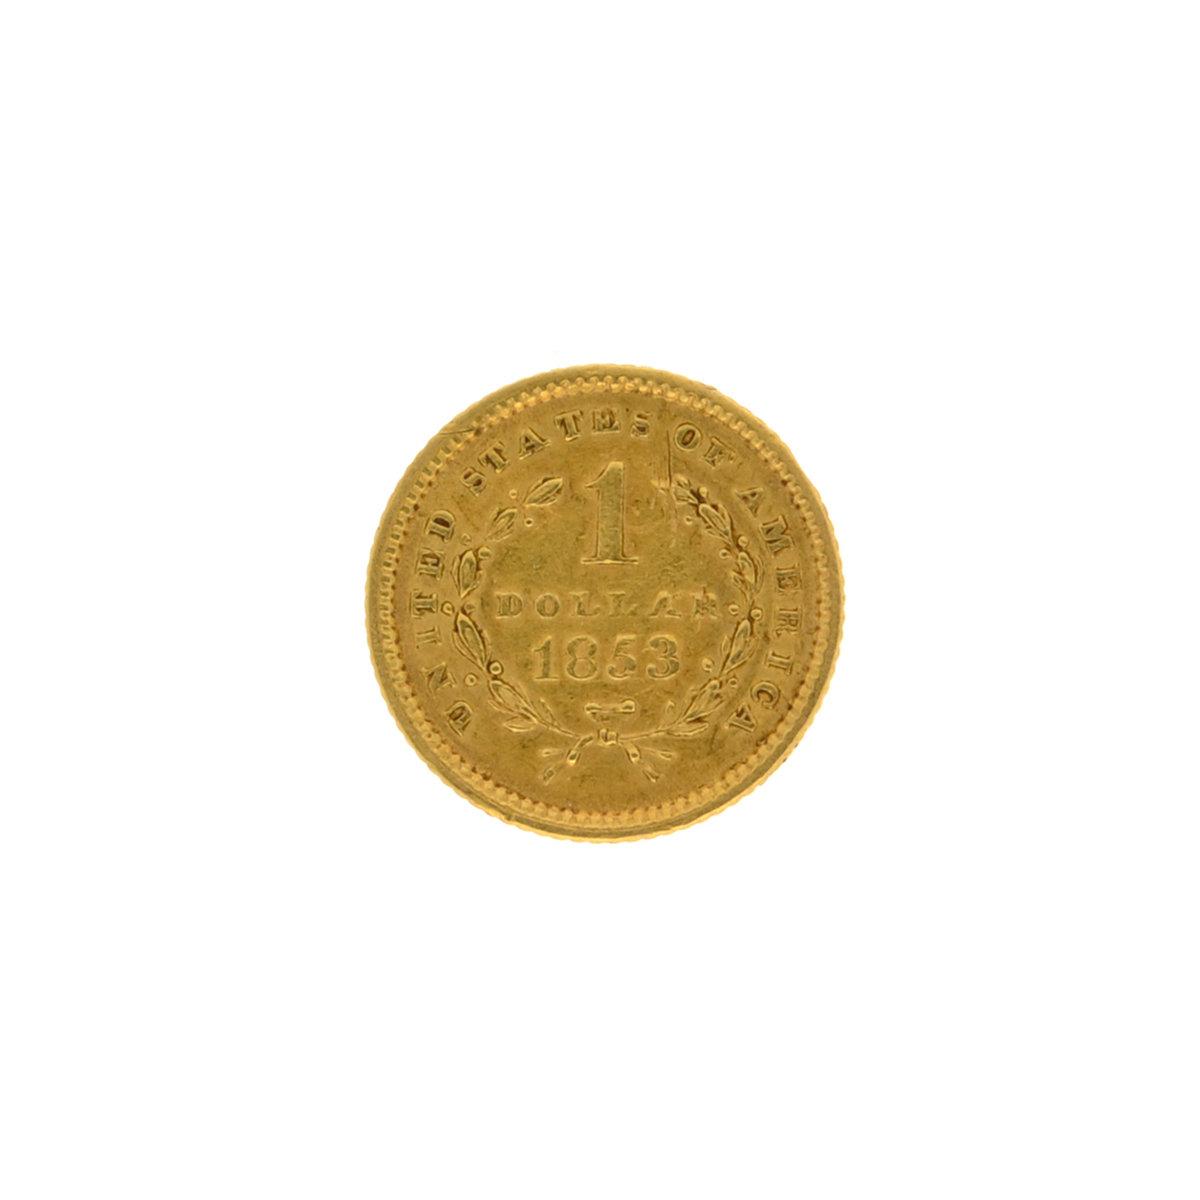 1853 $1 U.S. Liberty Head Gold Coin